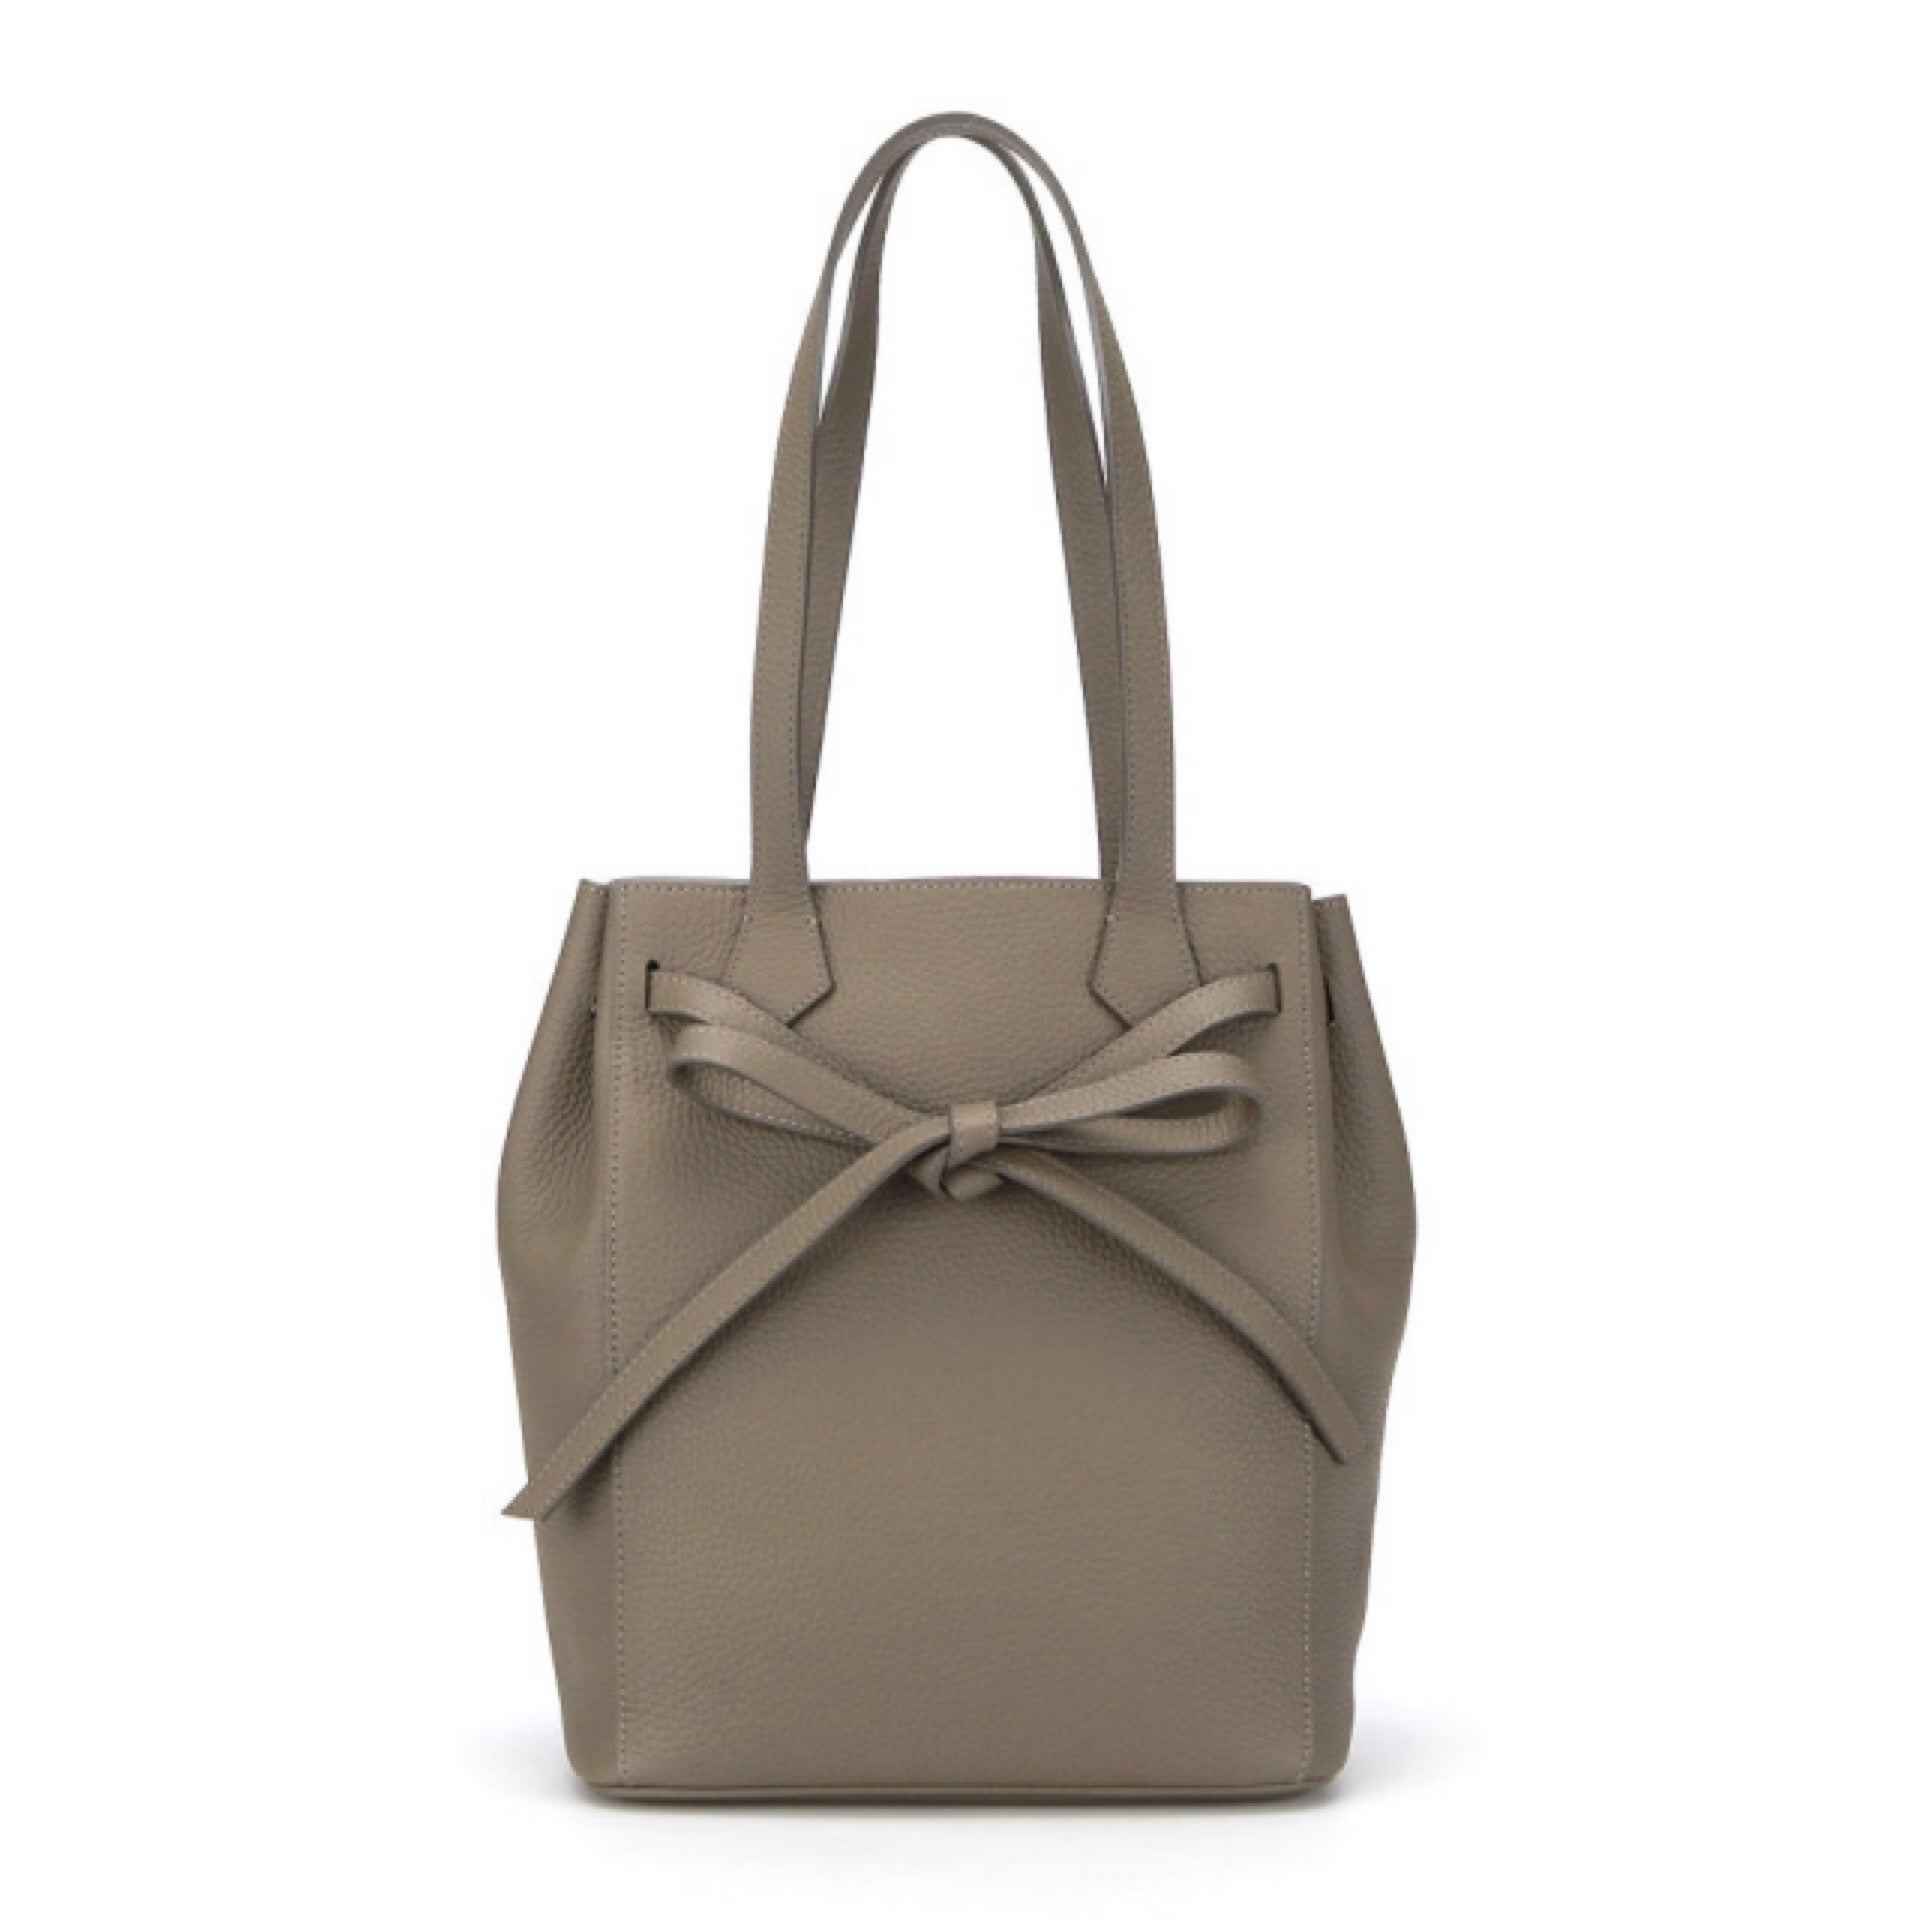 Palla Handbags - A-Bag Plus Reversible Bag | Palla Handbags … | Flickr